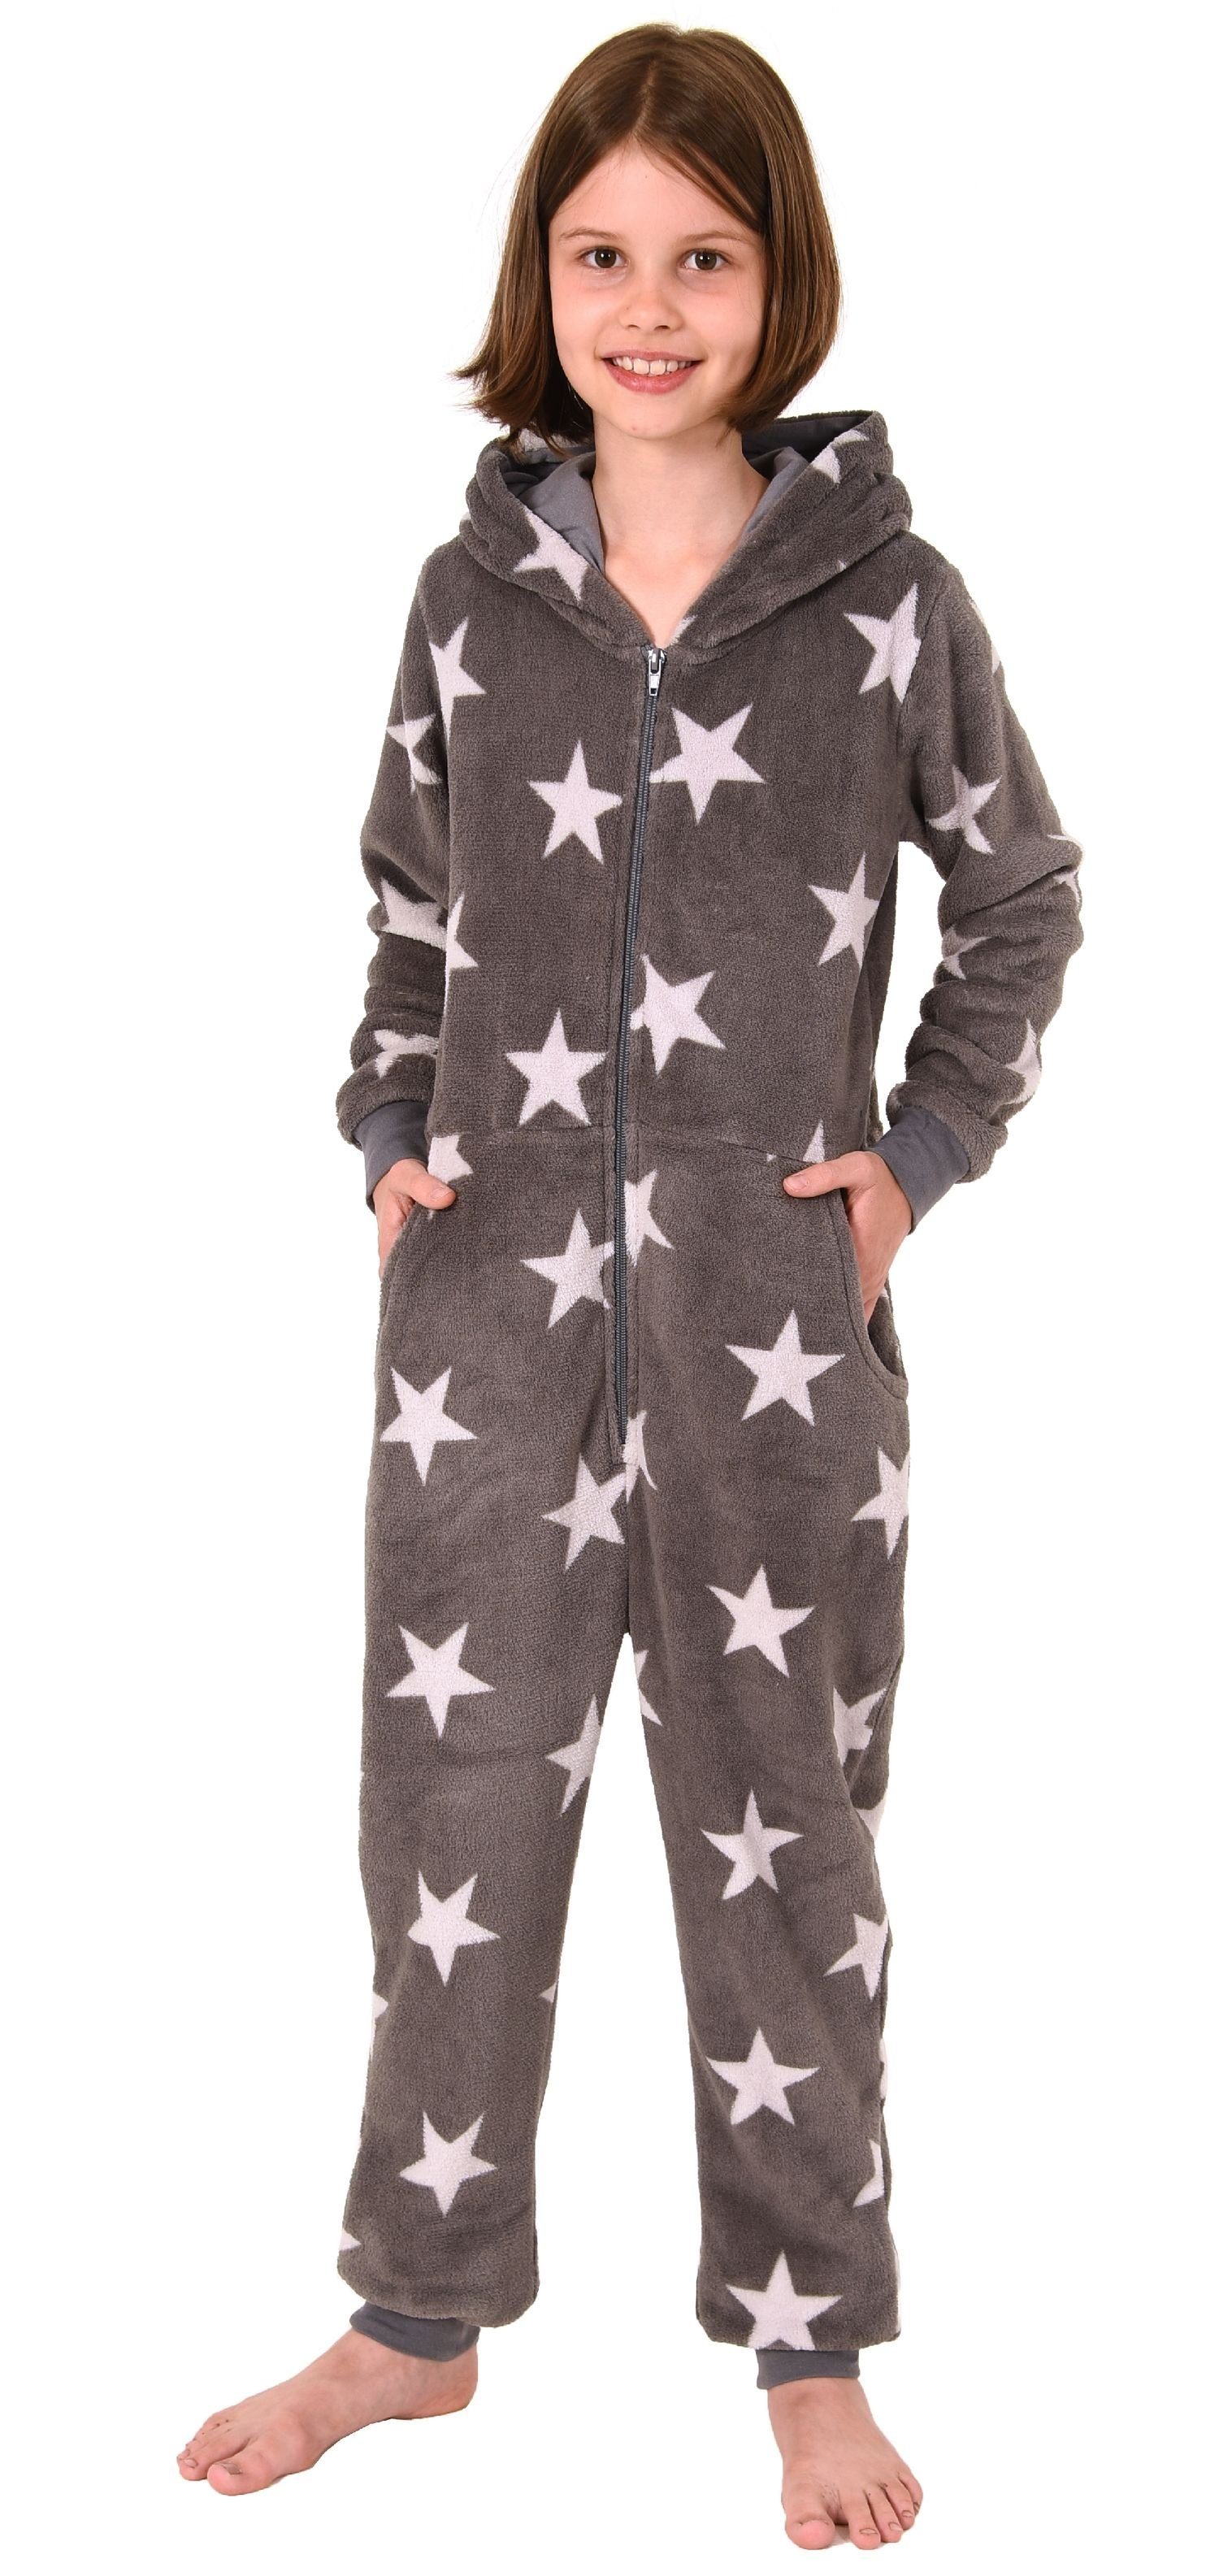 Normann Pyjama Mädchen Jumpsuit Overall Schlafanzug langarm Sternenmotiv grau